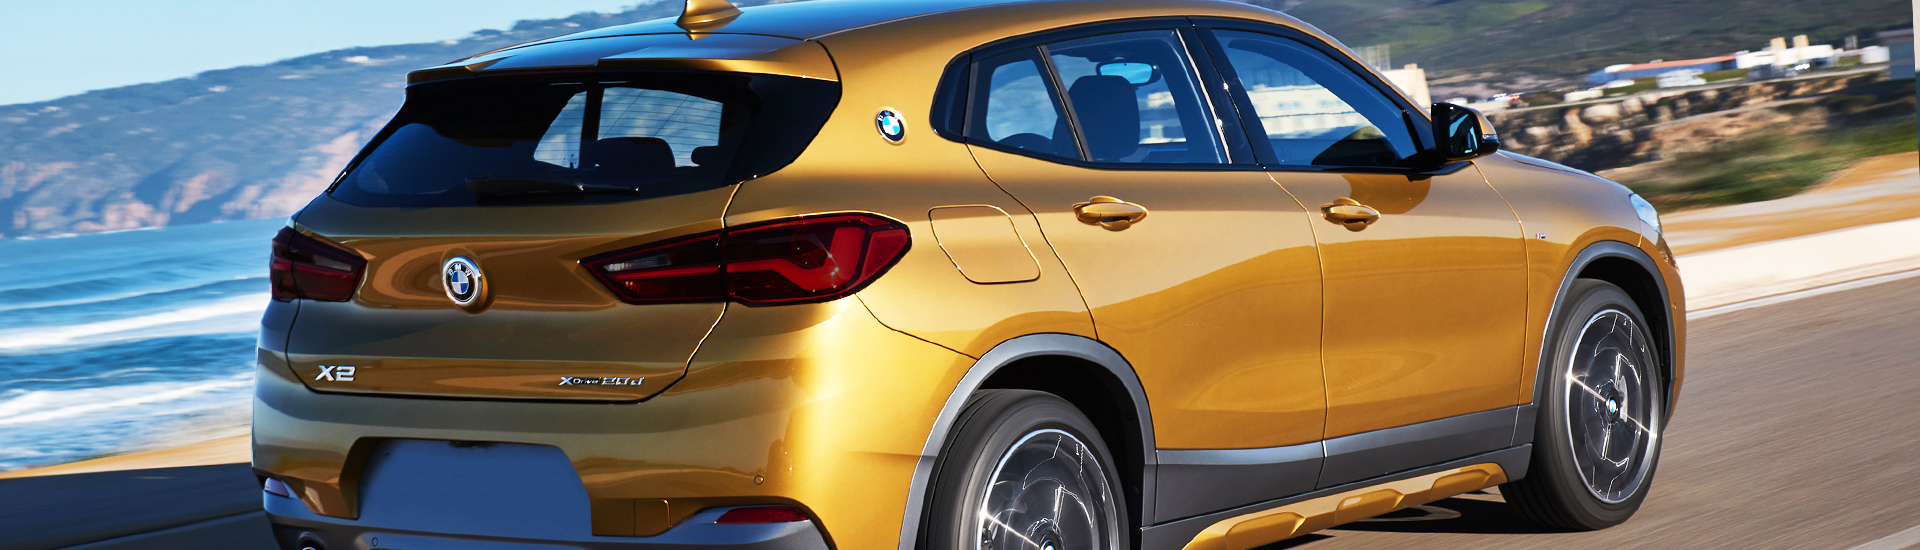 BMW X2 Tail Light Tint Covers